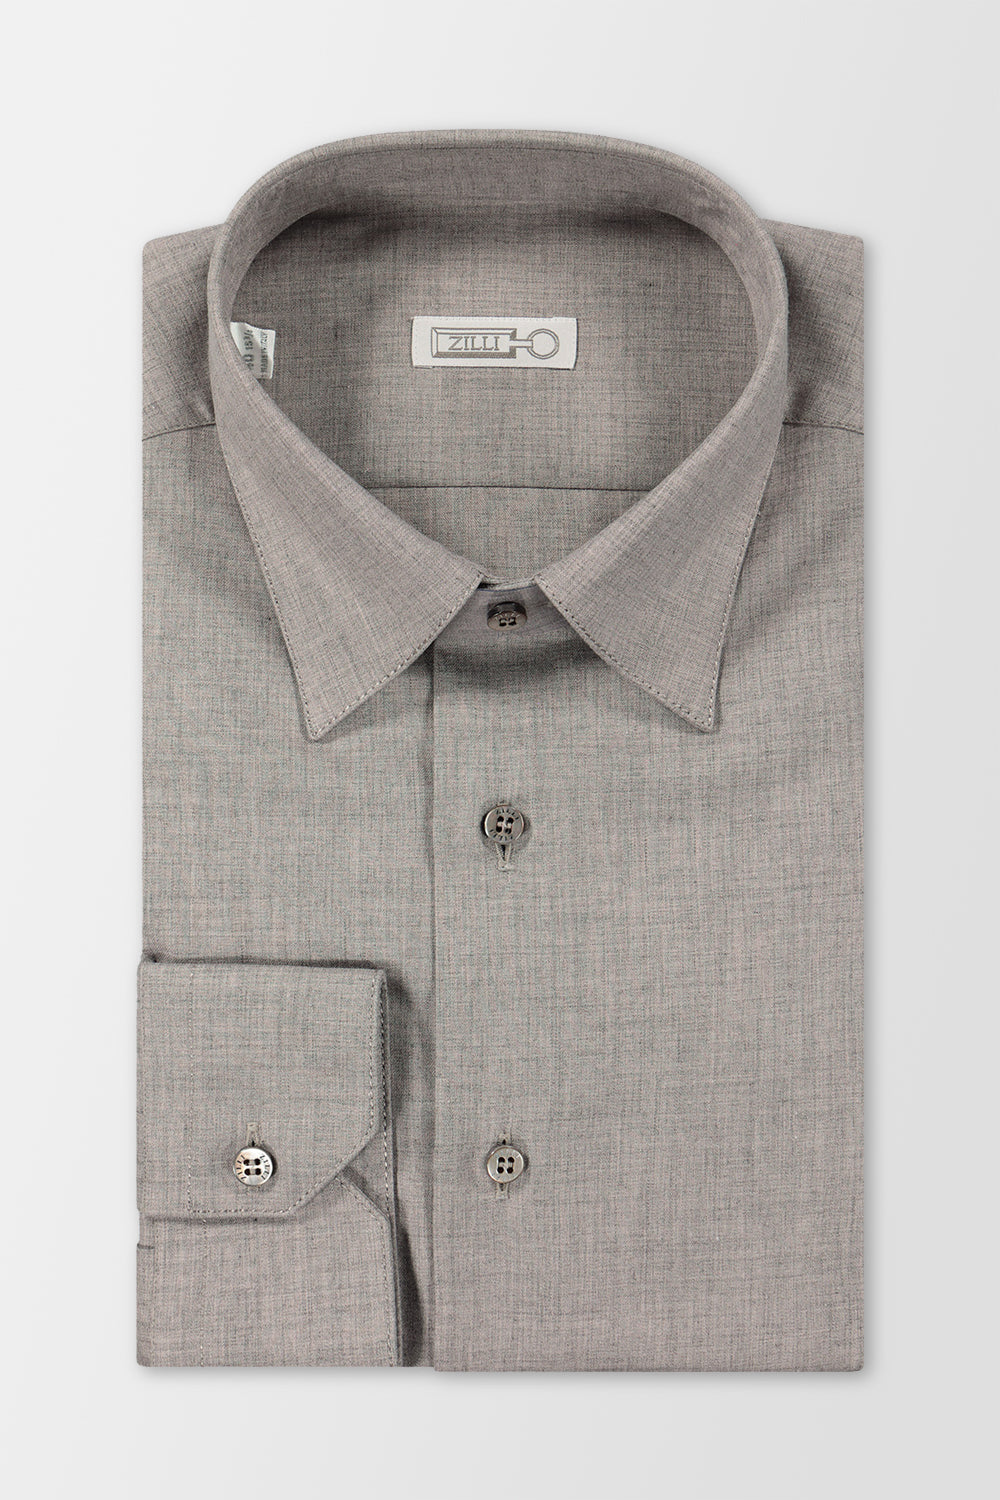 Zilli Grey Classic Shirt